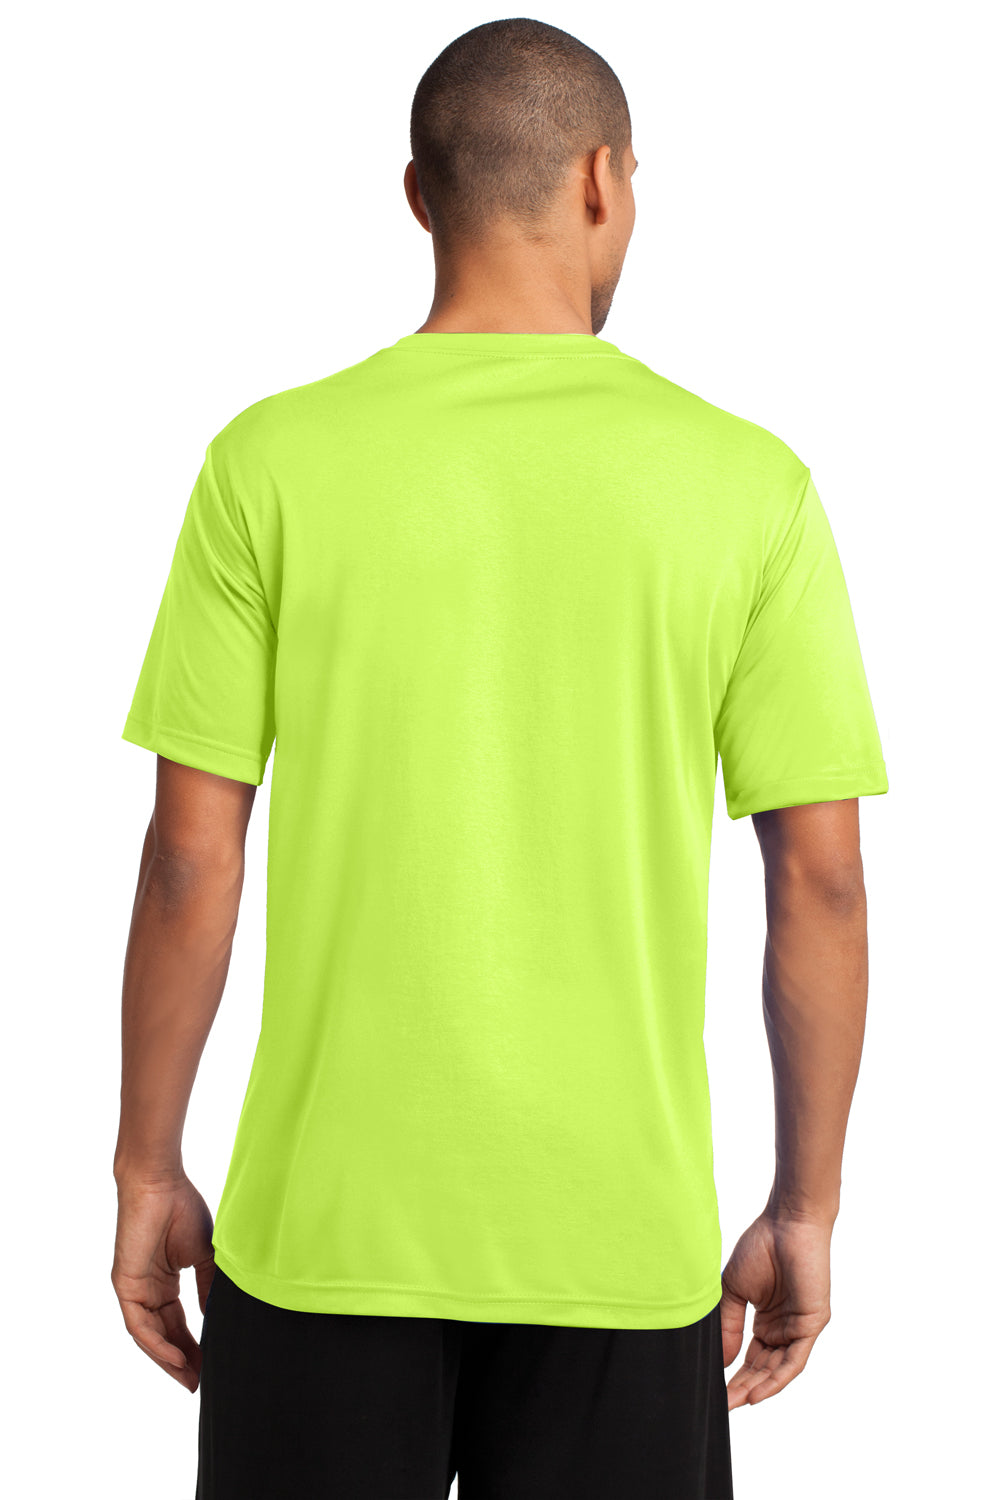 Port & Company PC380 Mens Dry Zone Performance Moisture Wicking Short Sleeve Crewneck T-Shirt Neon Yellow Back